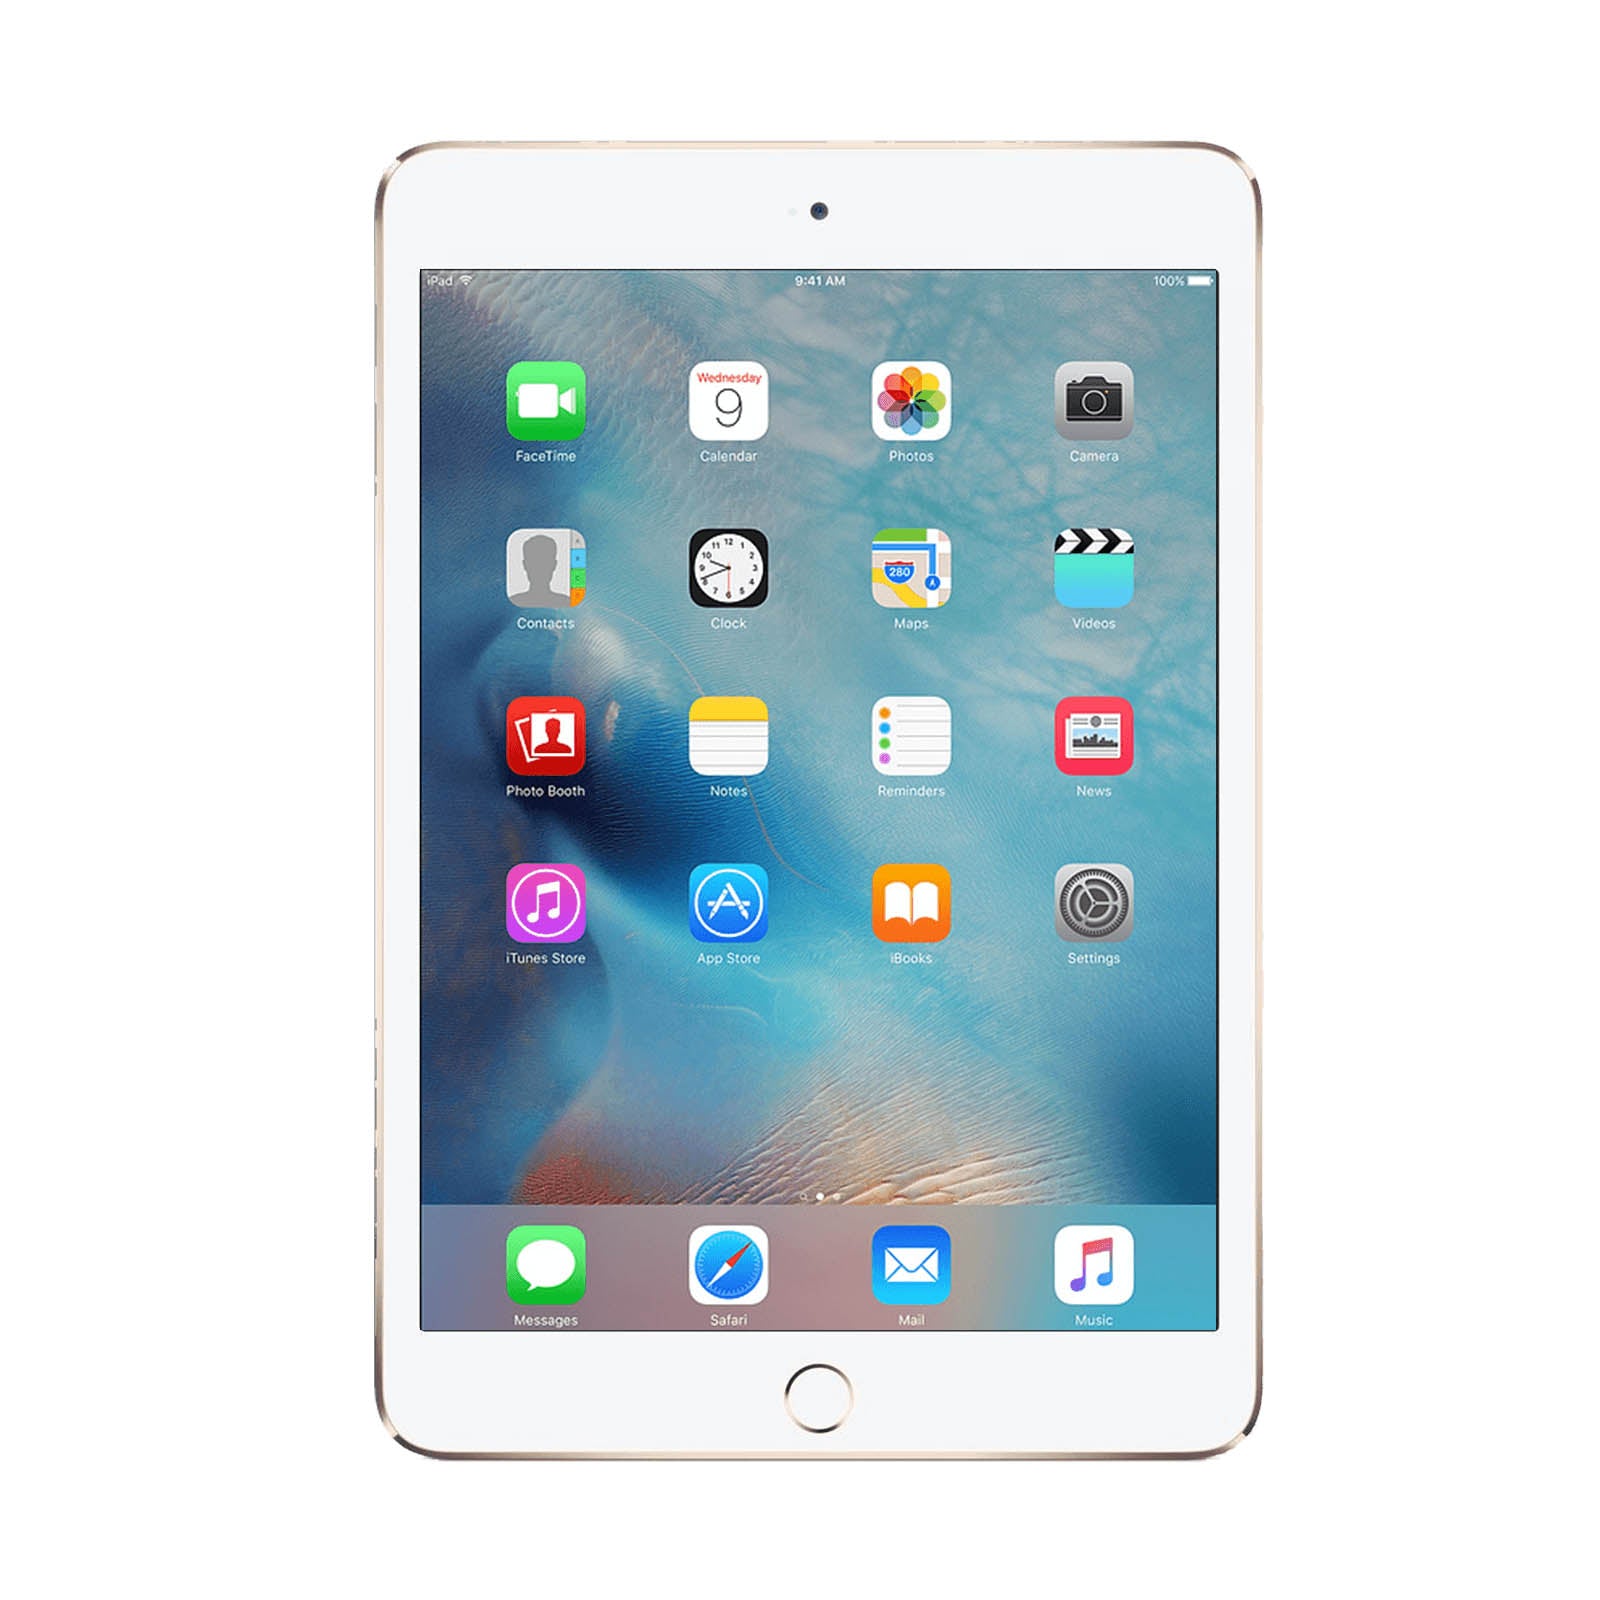 Apple iPad mini 3 16GB Gold Good - Unlocked